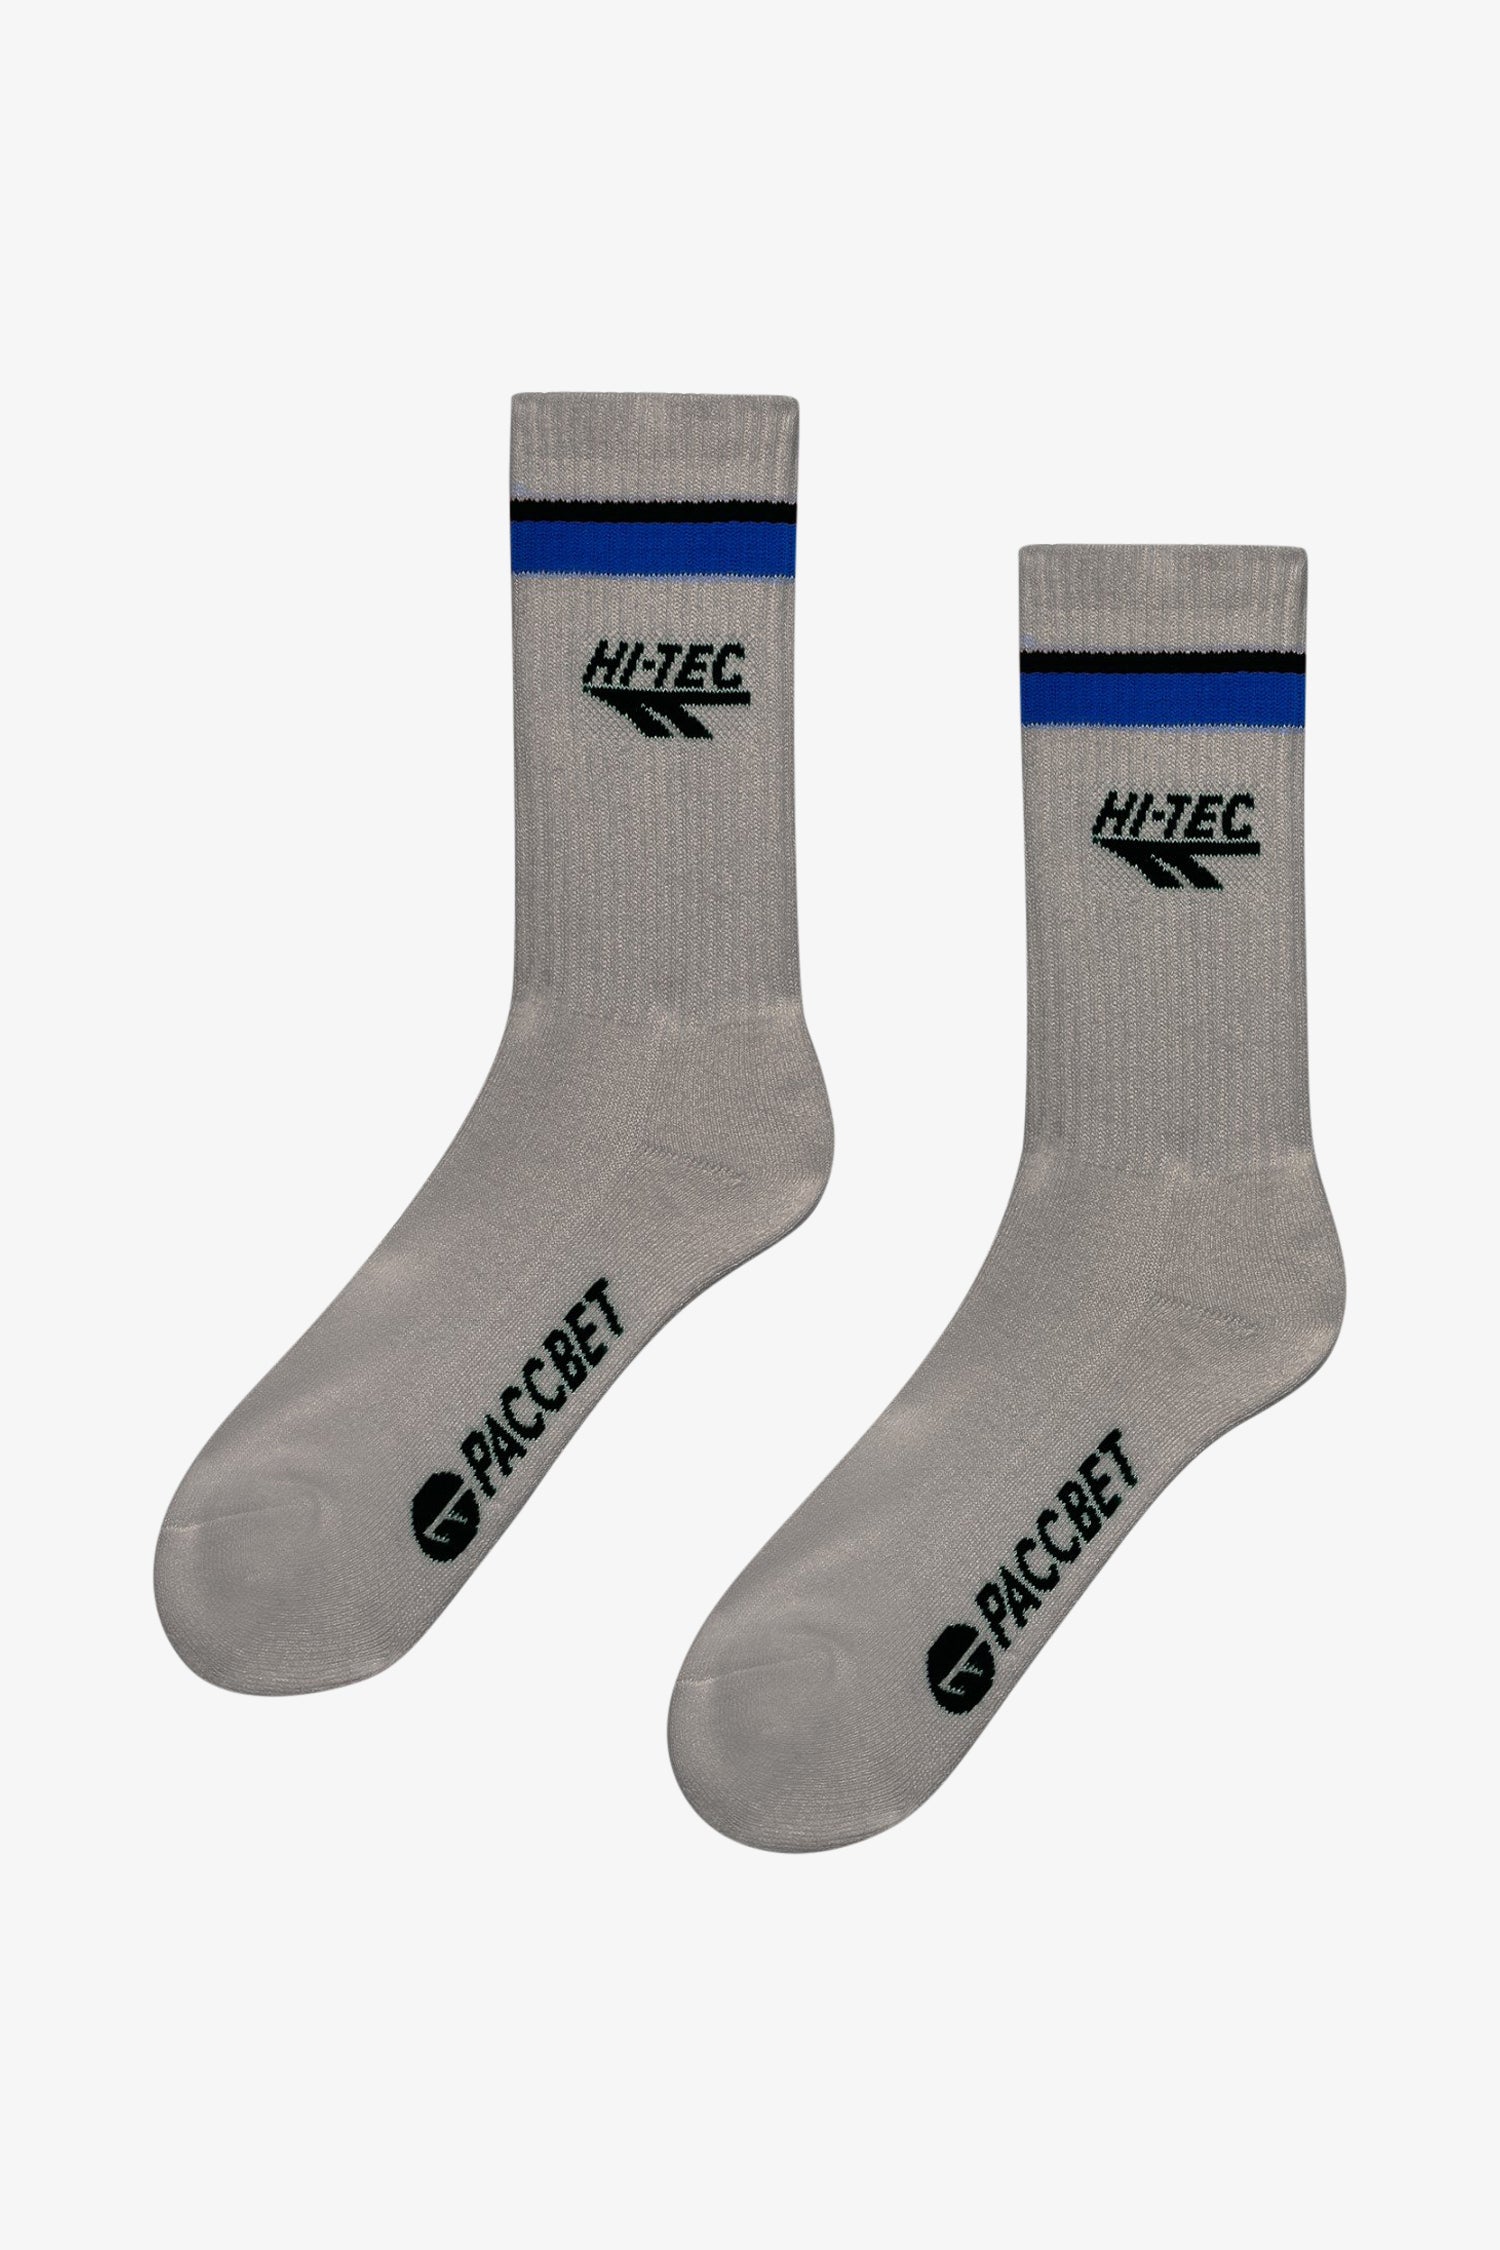 Selectshop FRAME - RASSVET Hi-Tec Socks socks Dubai